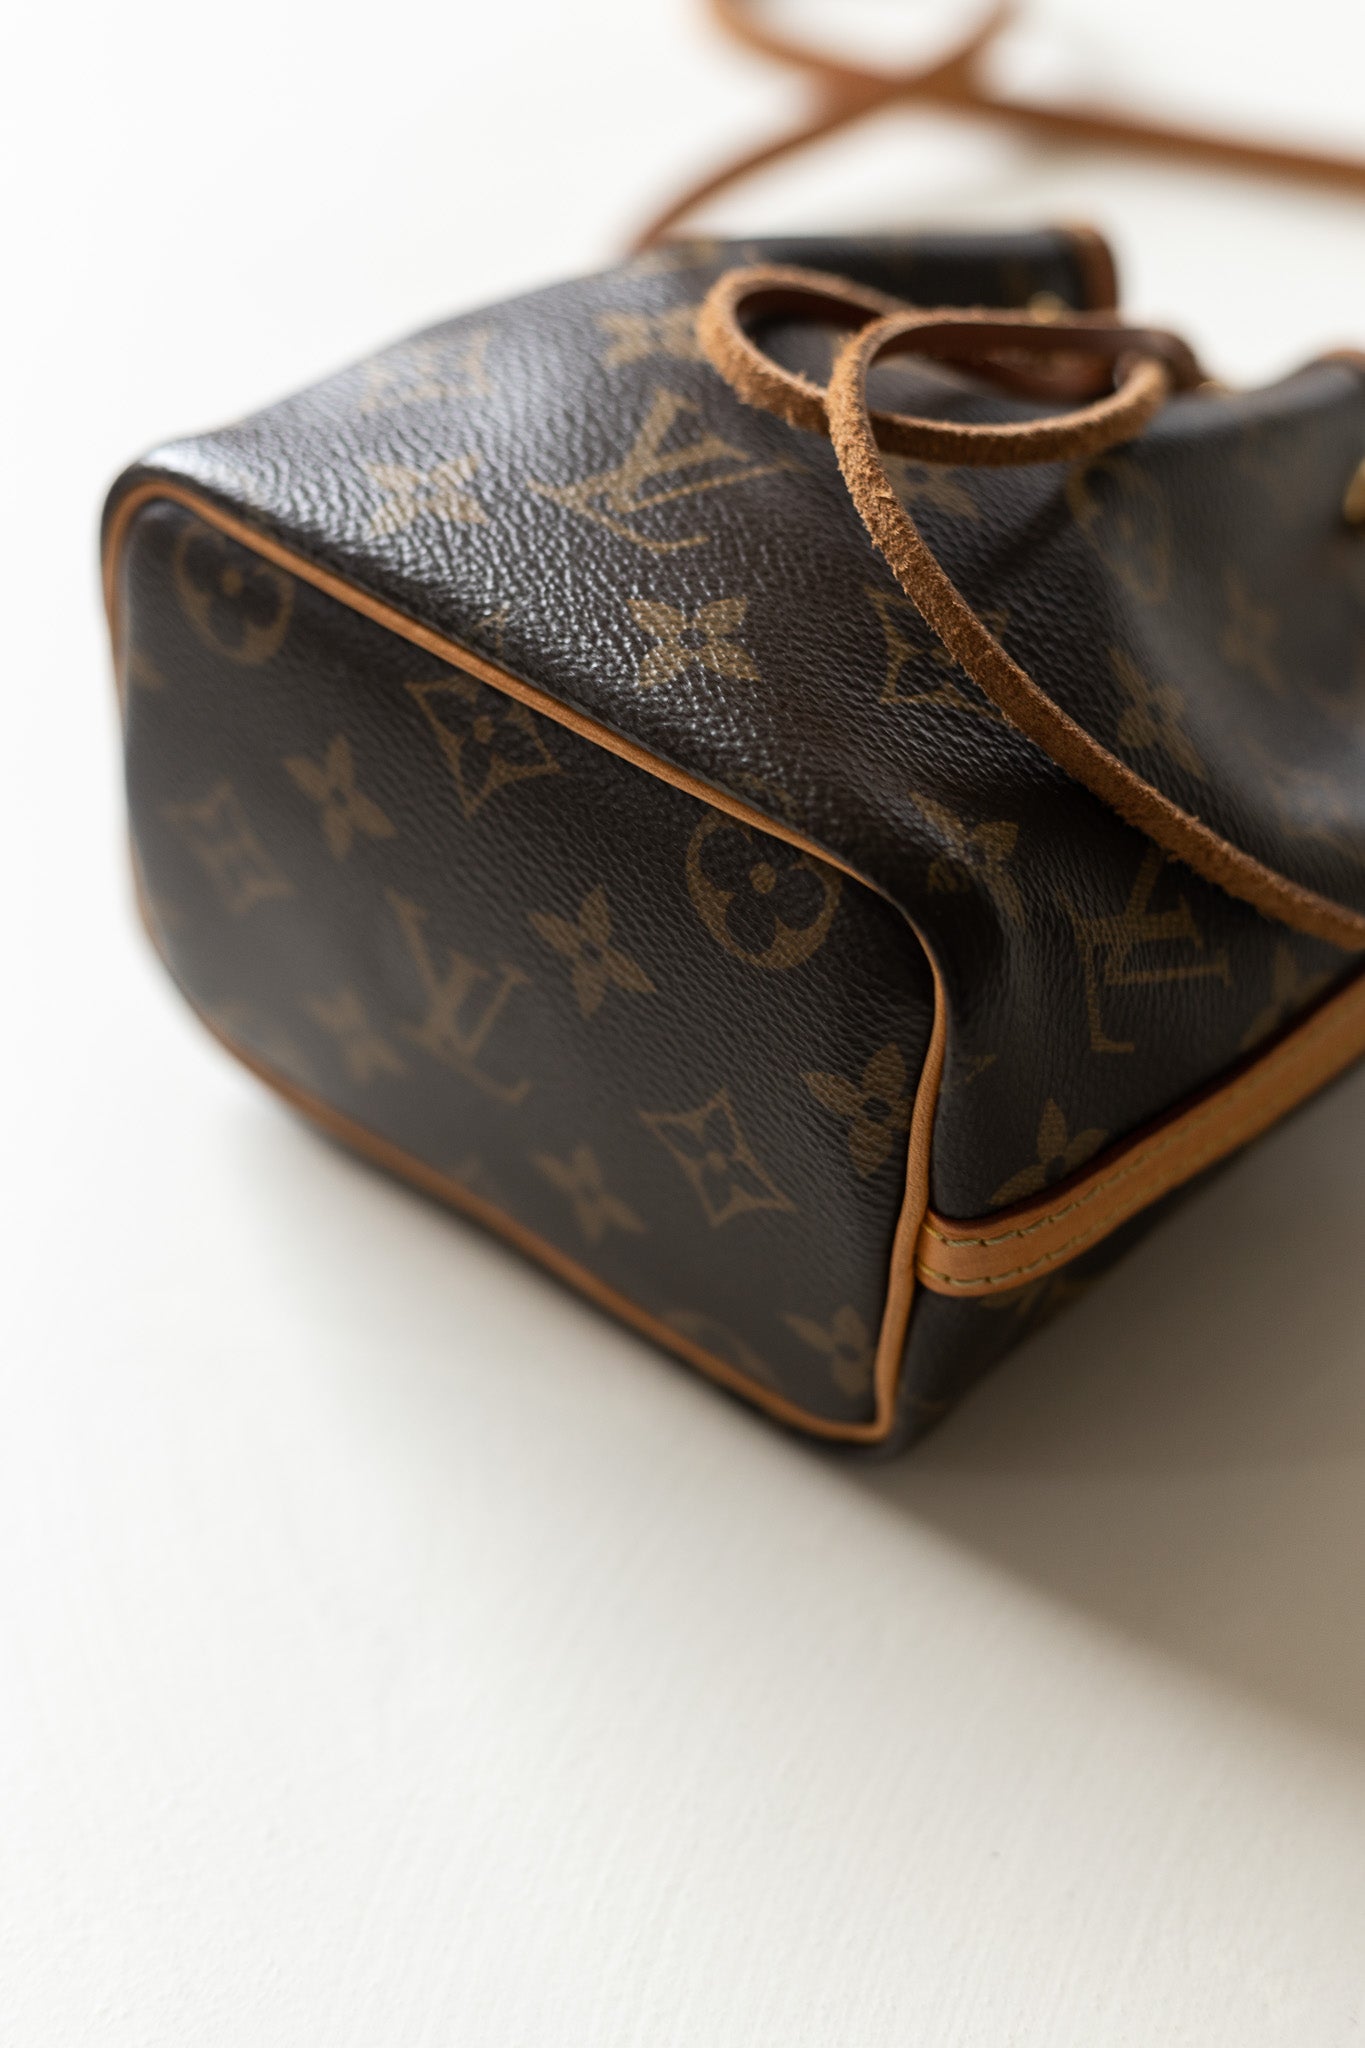 Louis Vuitton nano noe Vs Gucci Marmont mini bucket bag-Which one? 